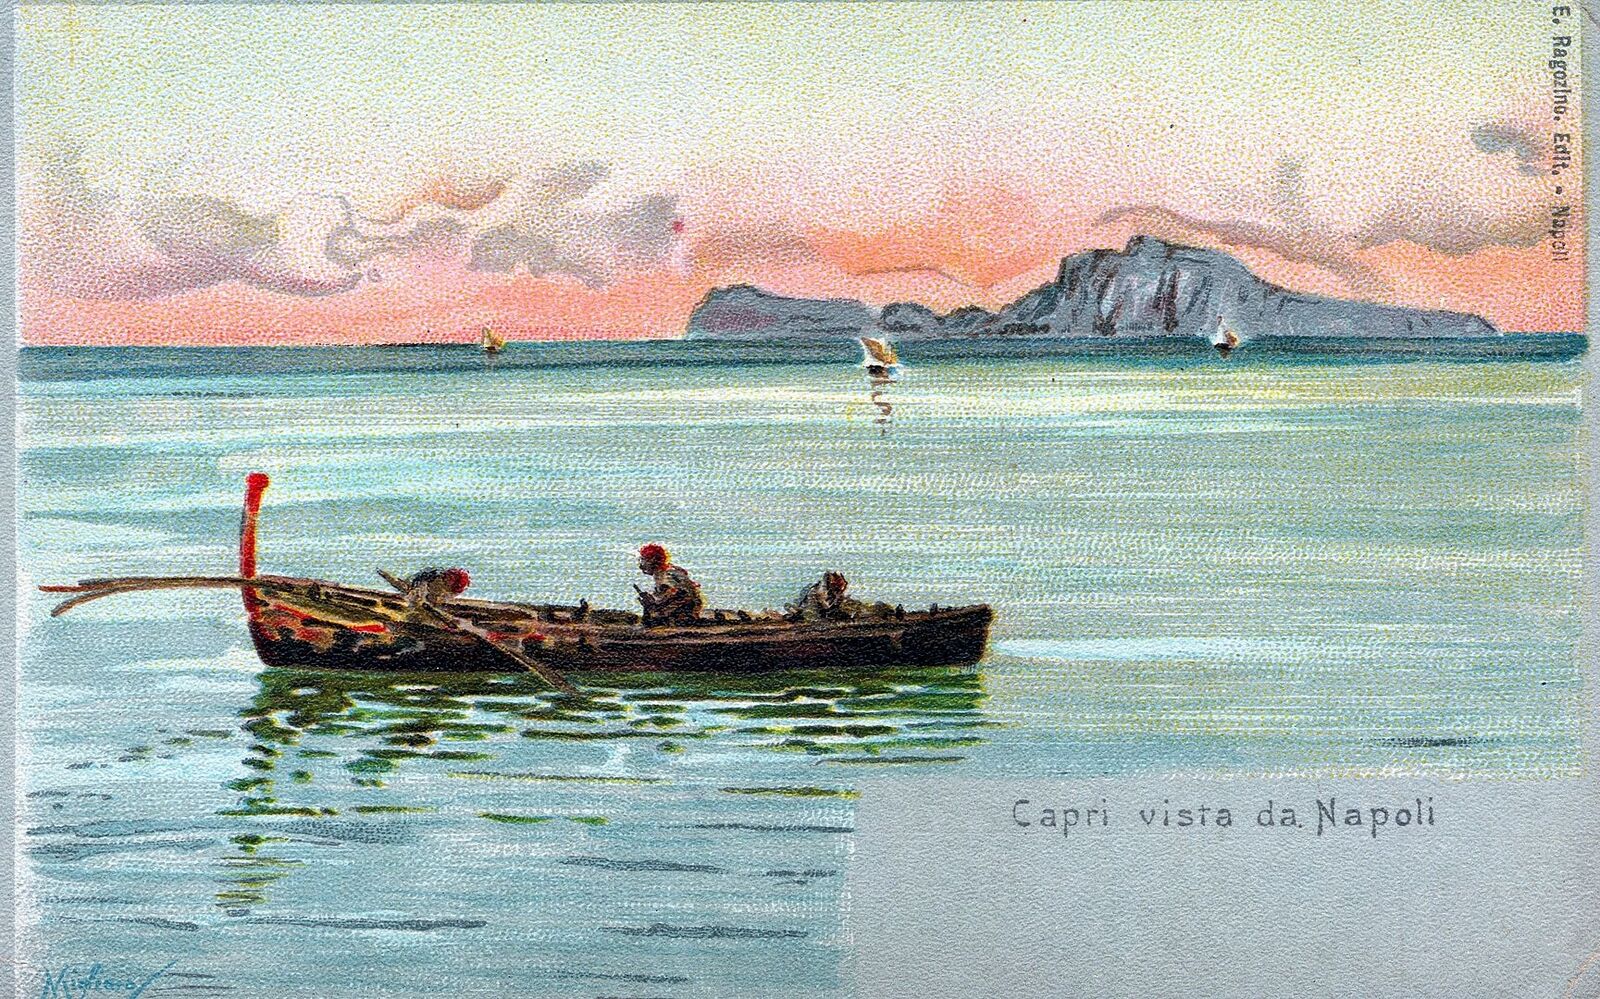 CAPRI - Capri Vista Da Napoli Capri Seen From Naples Postcard - Italy - udb